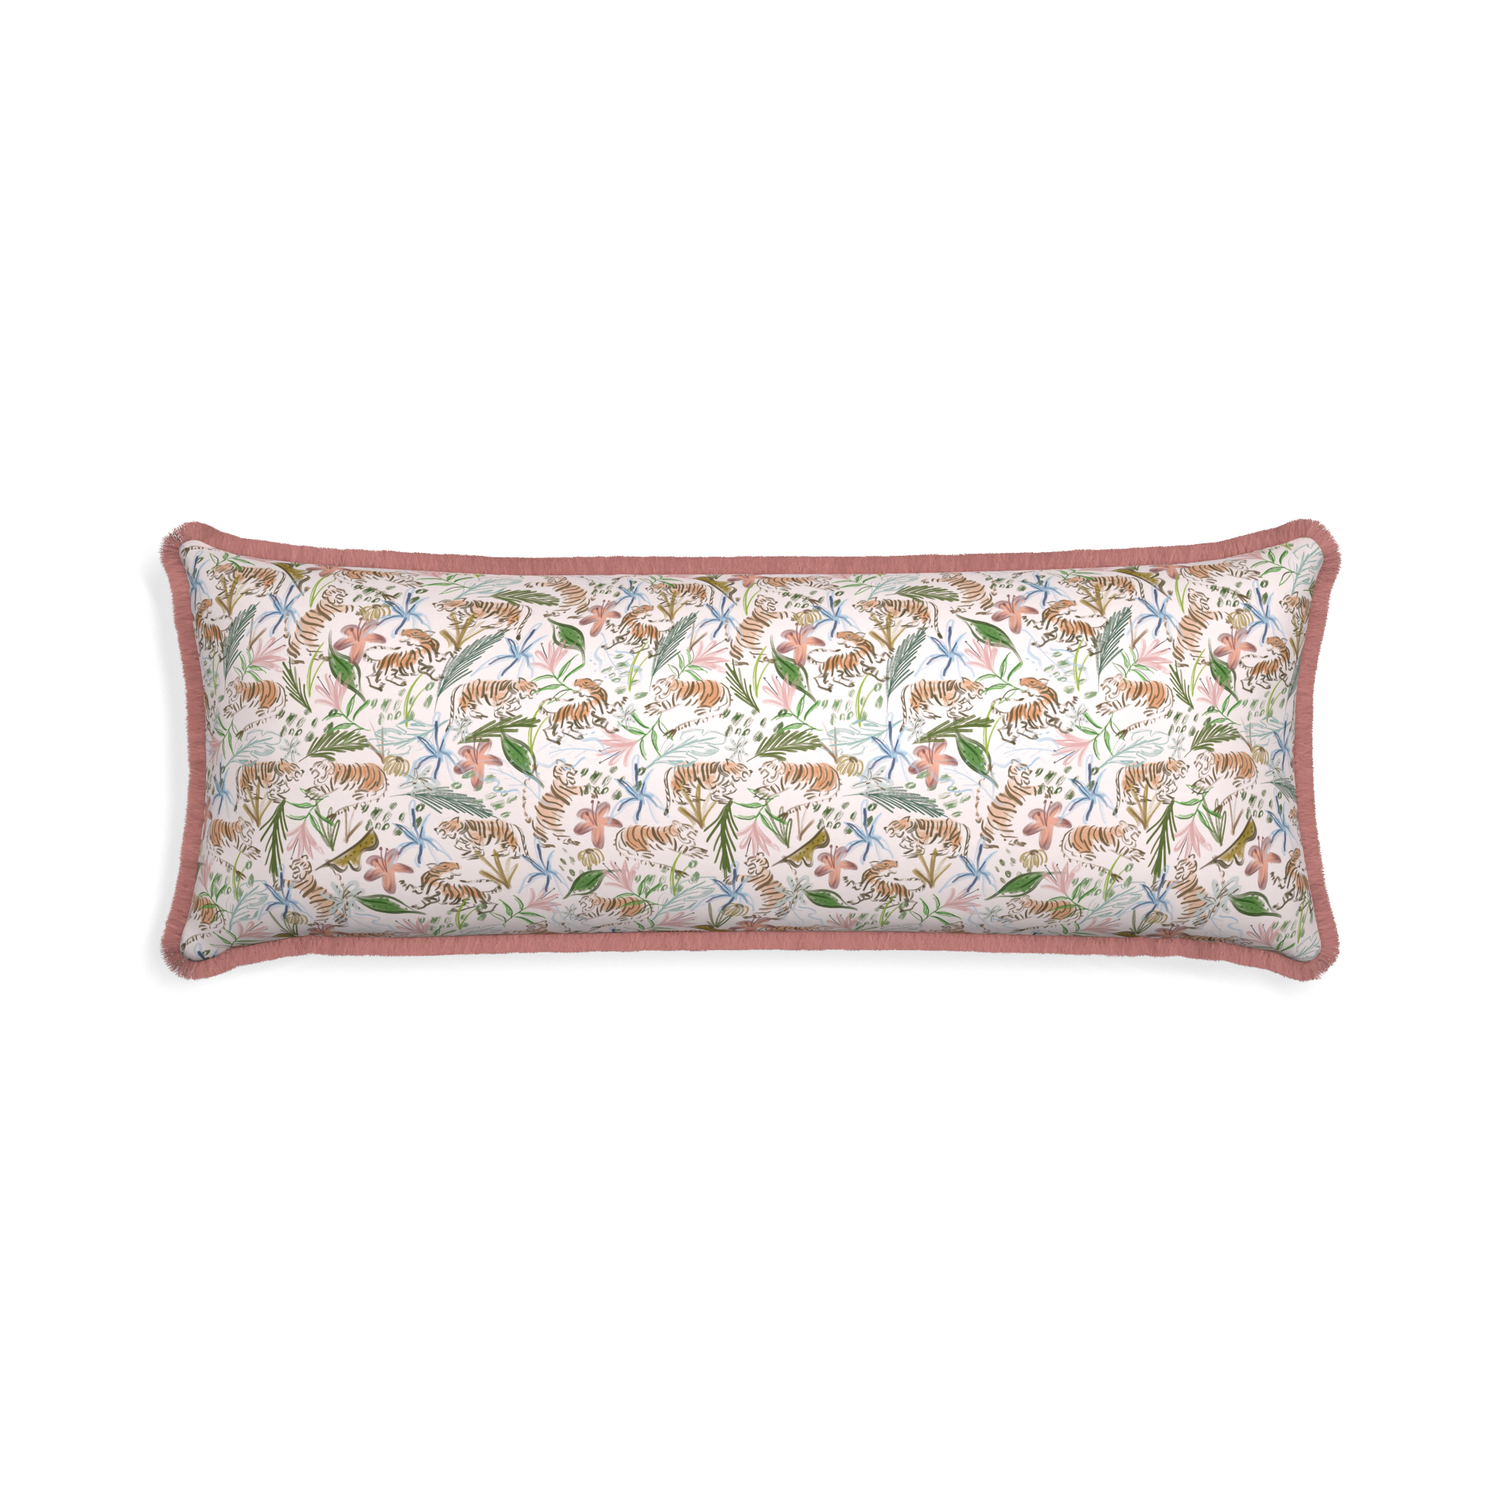 Xl-lumbar frida pink custom pillow with d fringe on white background